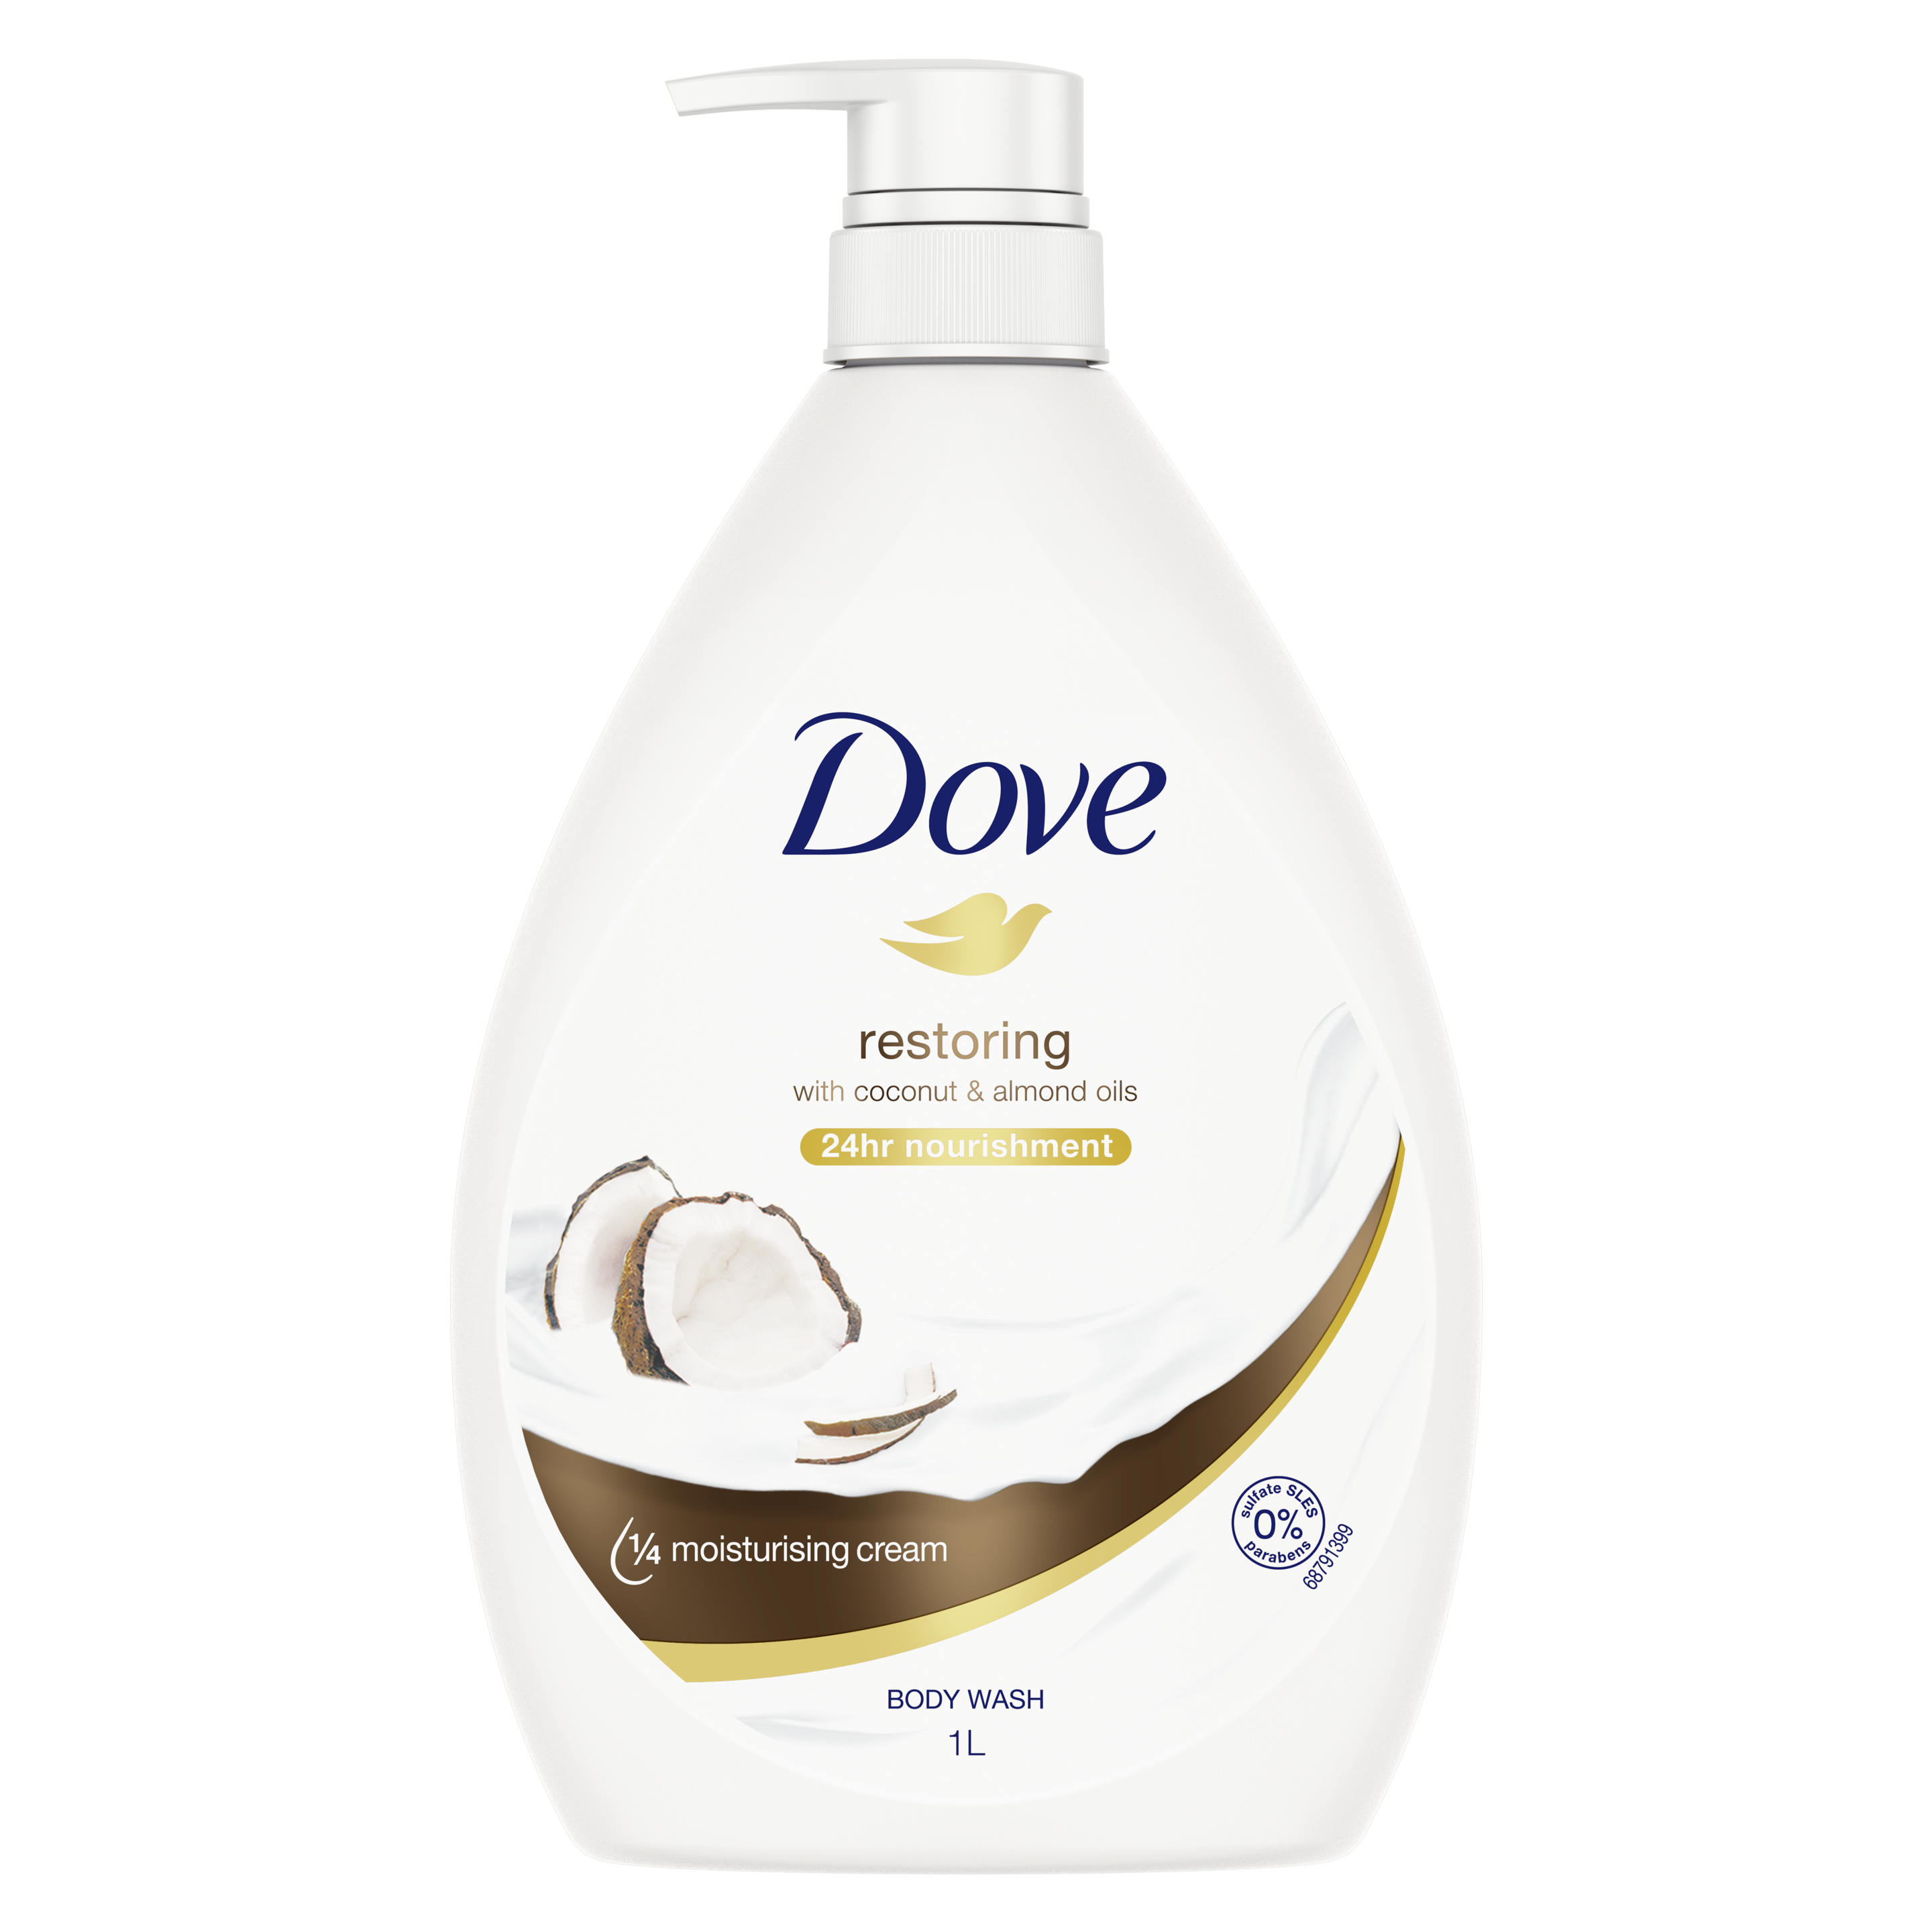 Dove Restoring Coconut Body Wash 1L Text